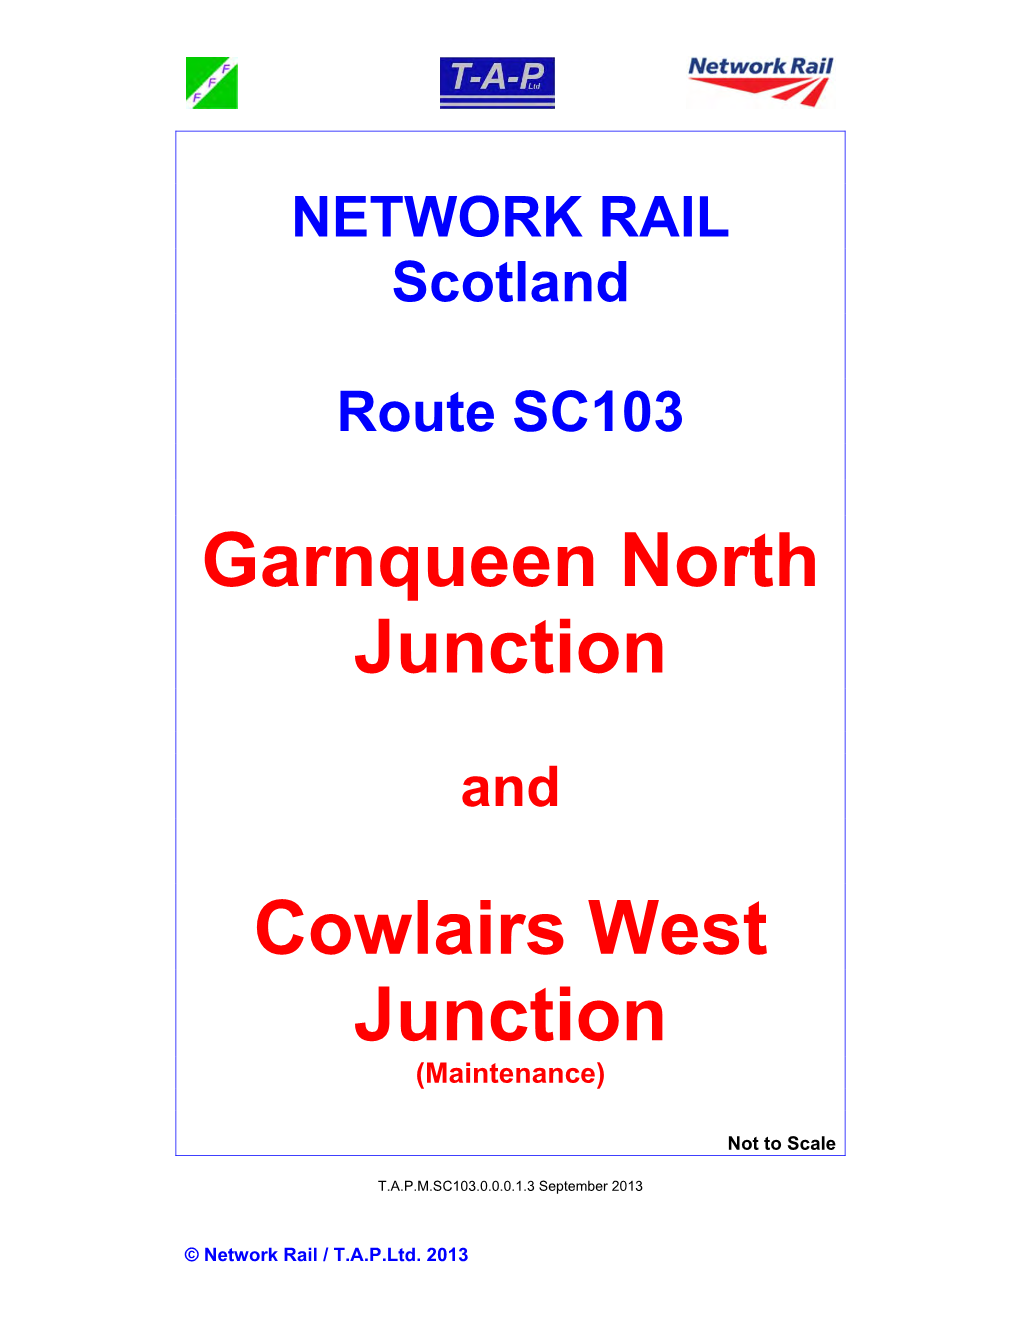 Garnqueen North Junction Cowlairs West Junction